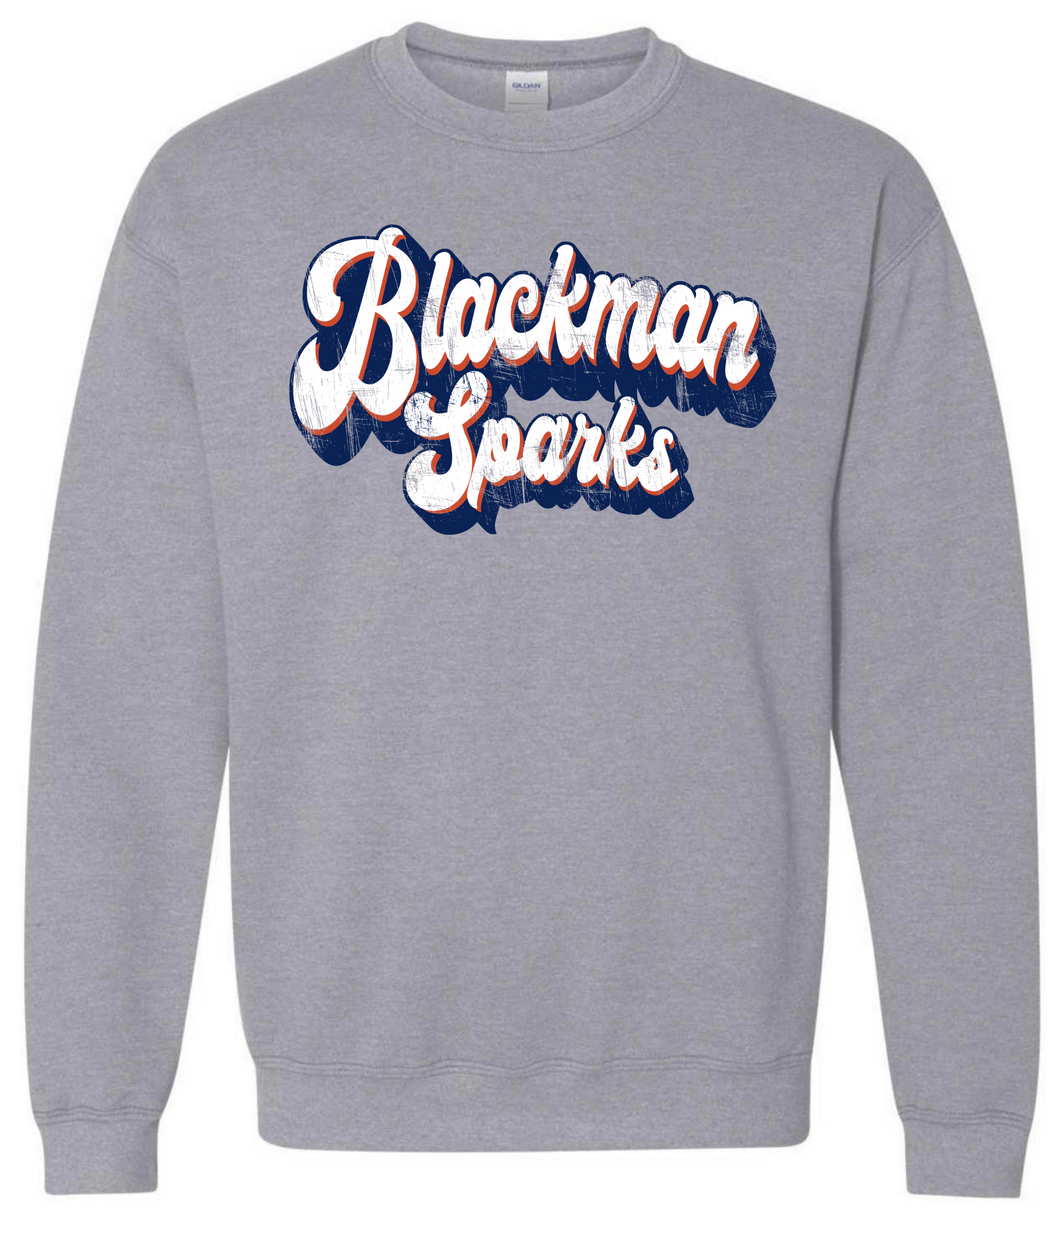 Distressed Blackman Sparks Sweatshirt